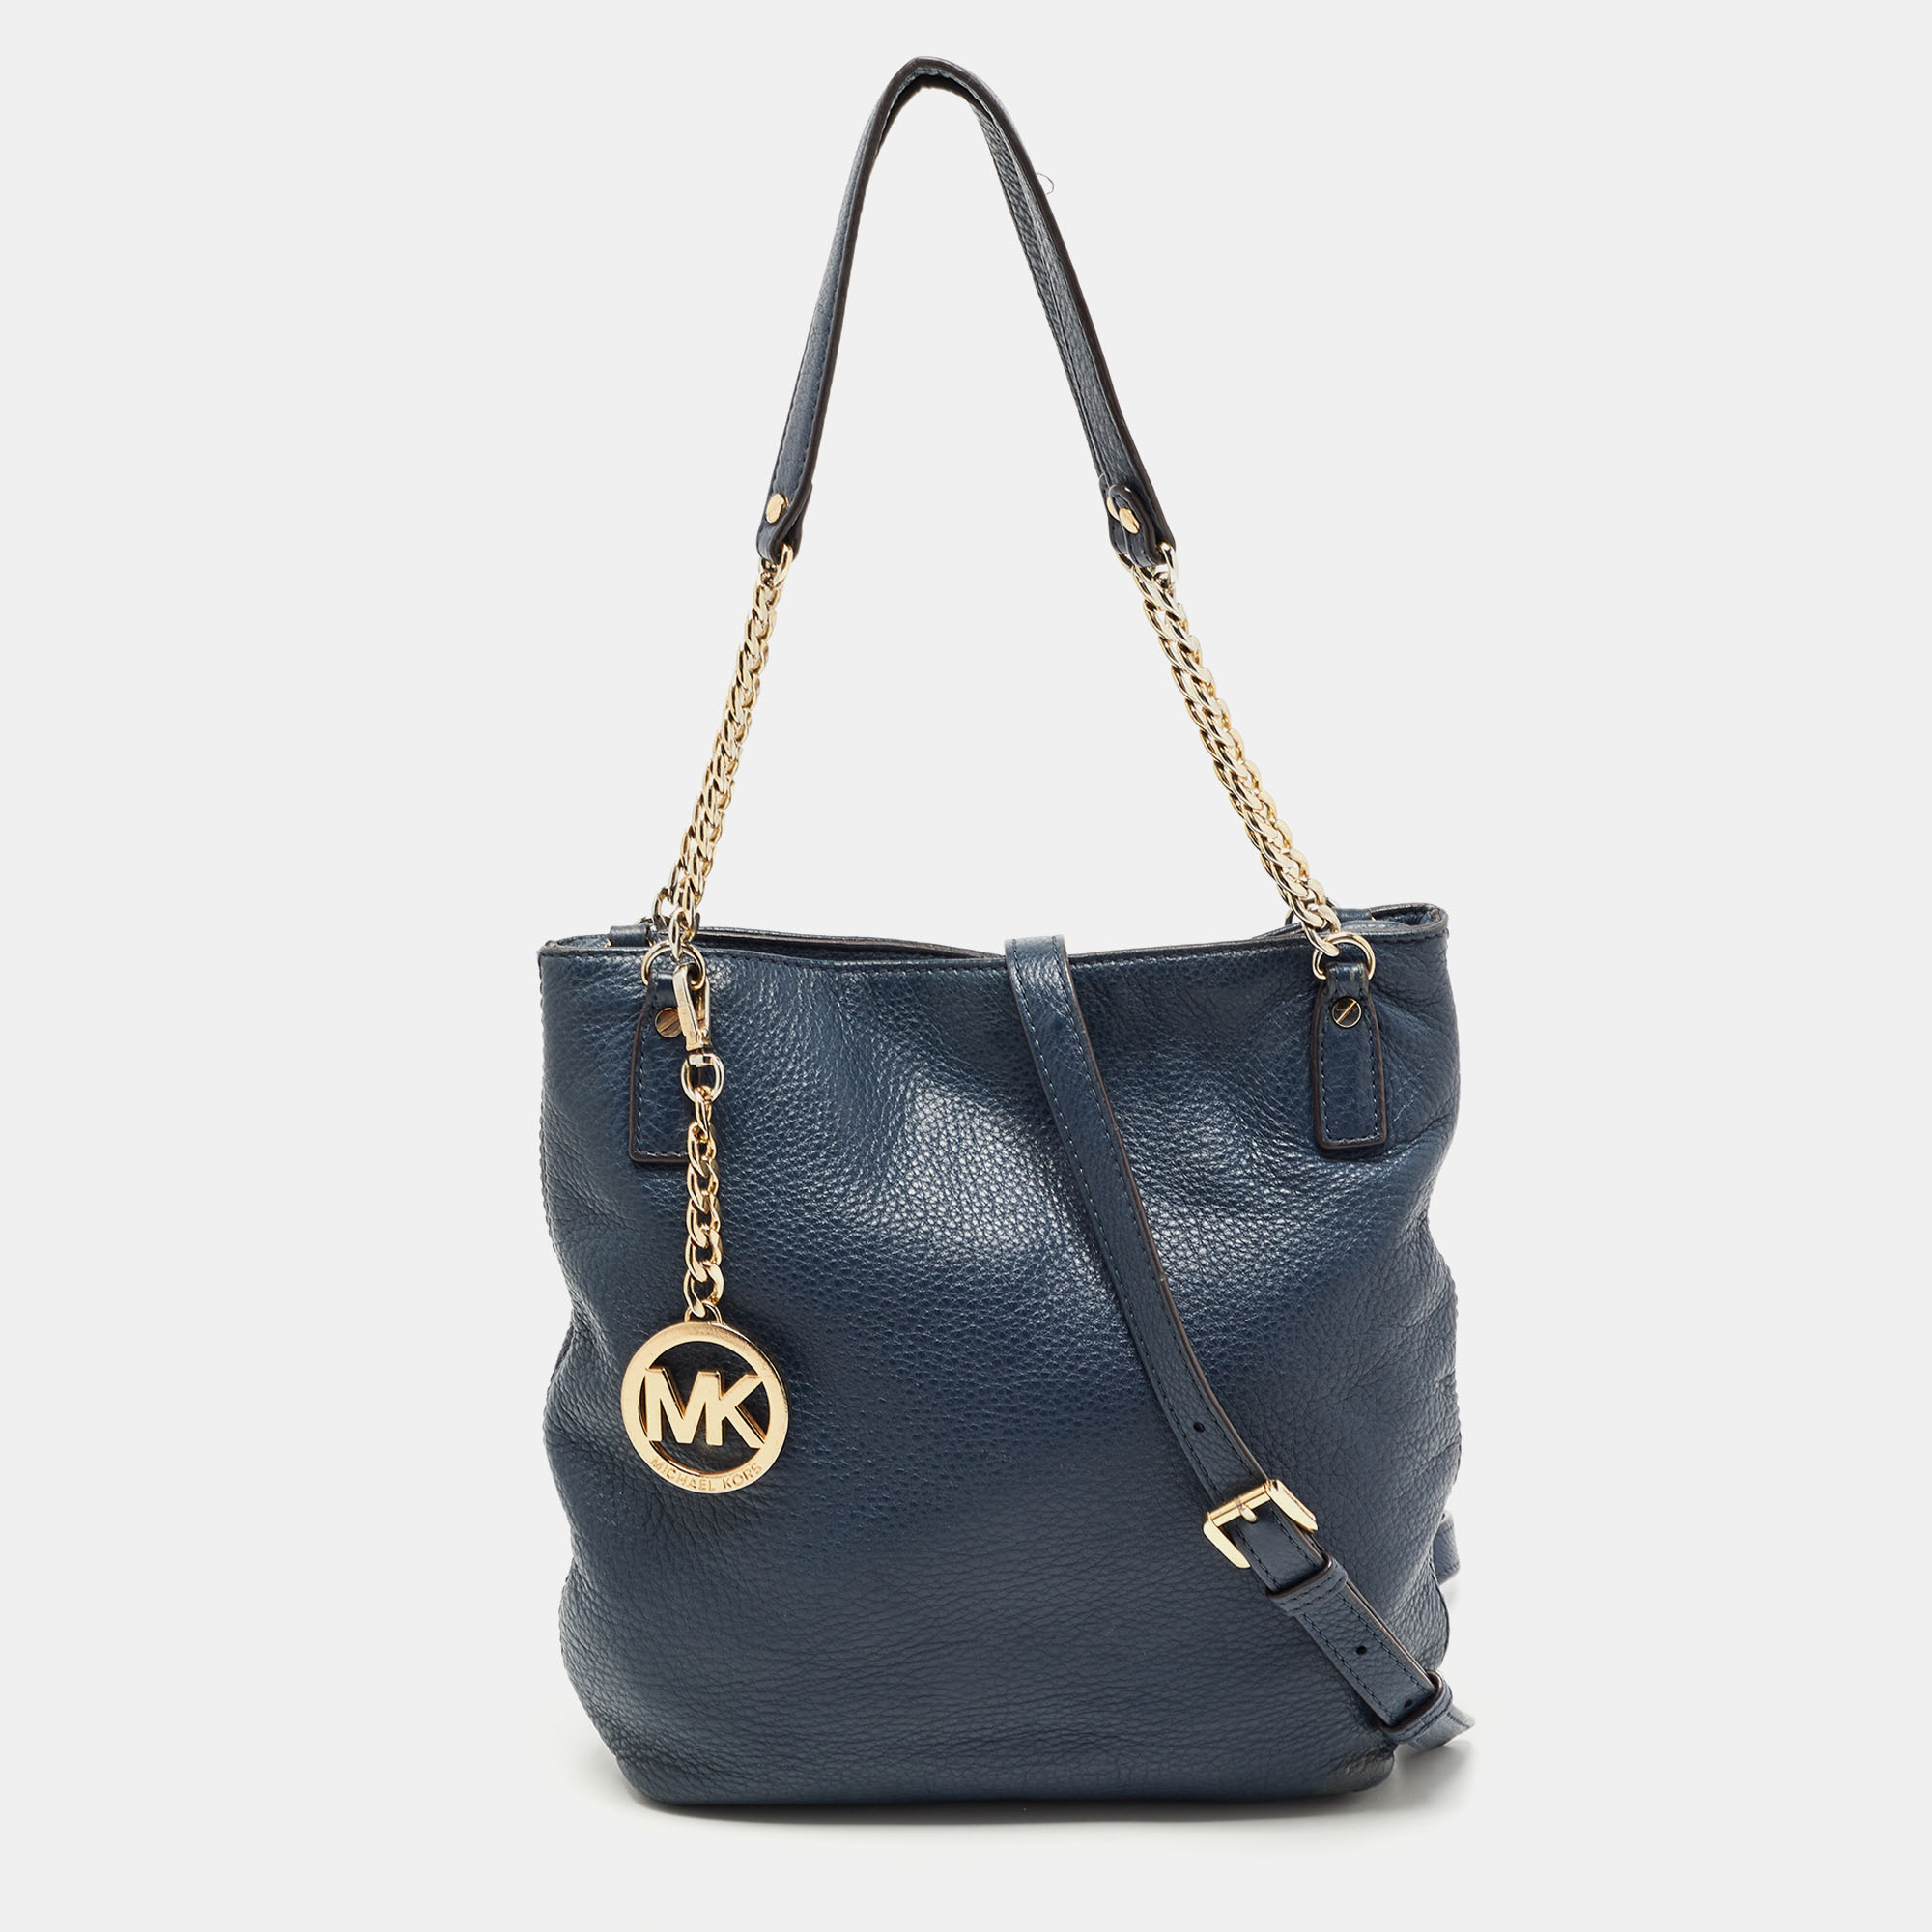 Pre-owned Michael Kors Navy Blue Soft Leather Chain Shoulder Bag